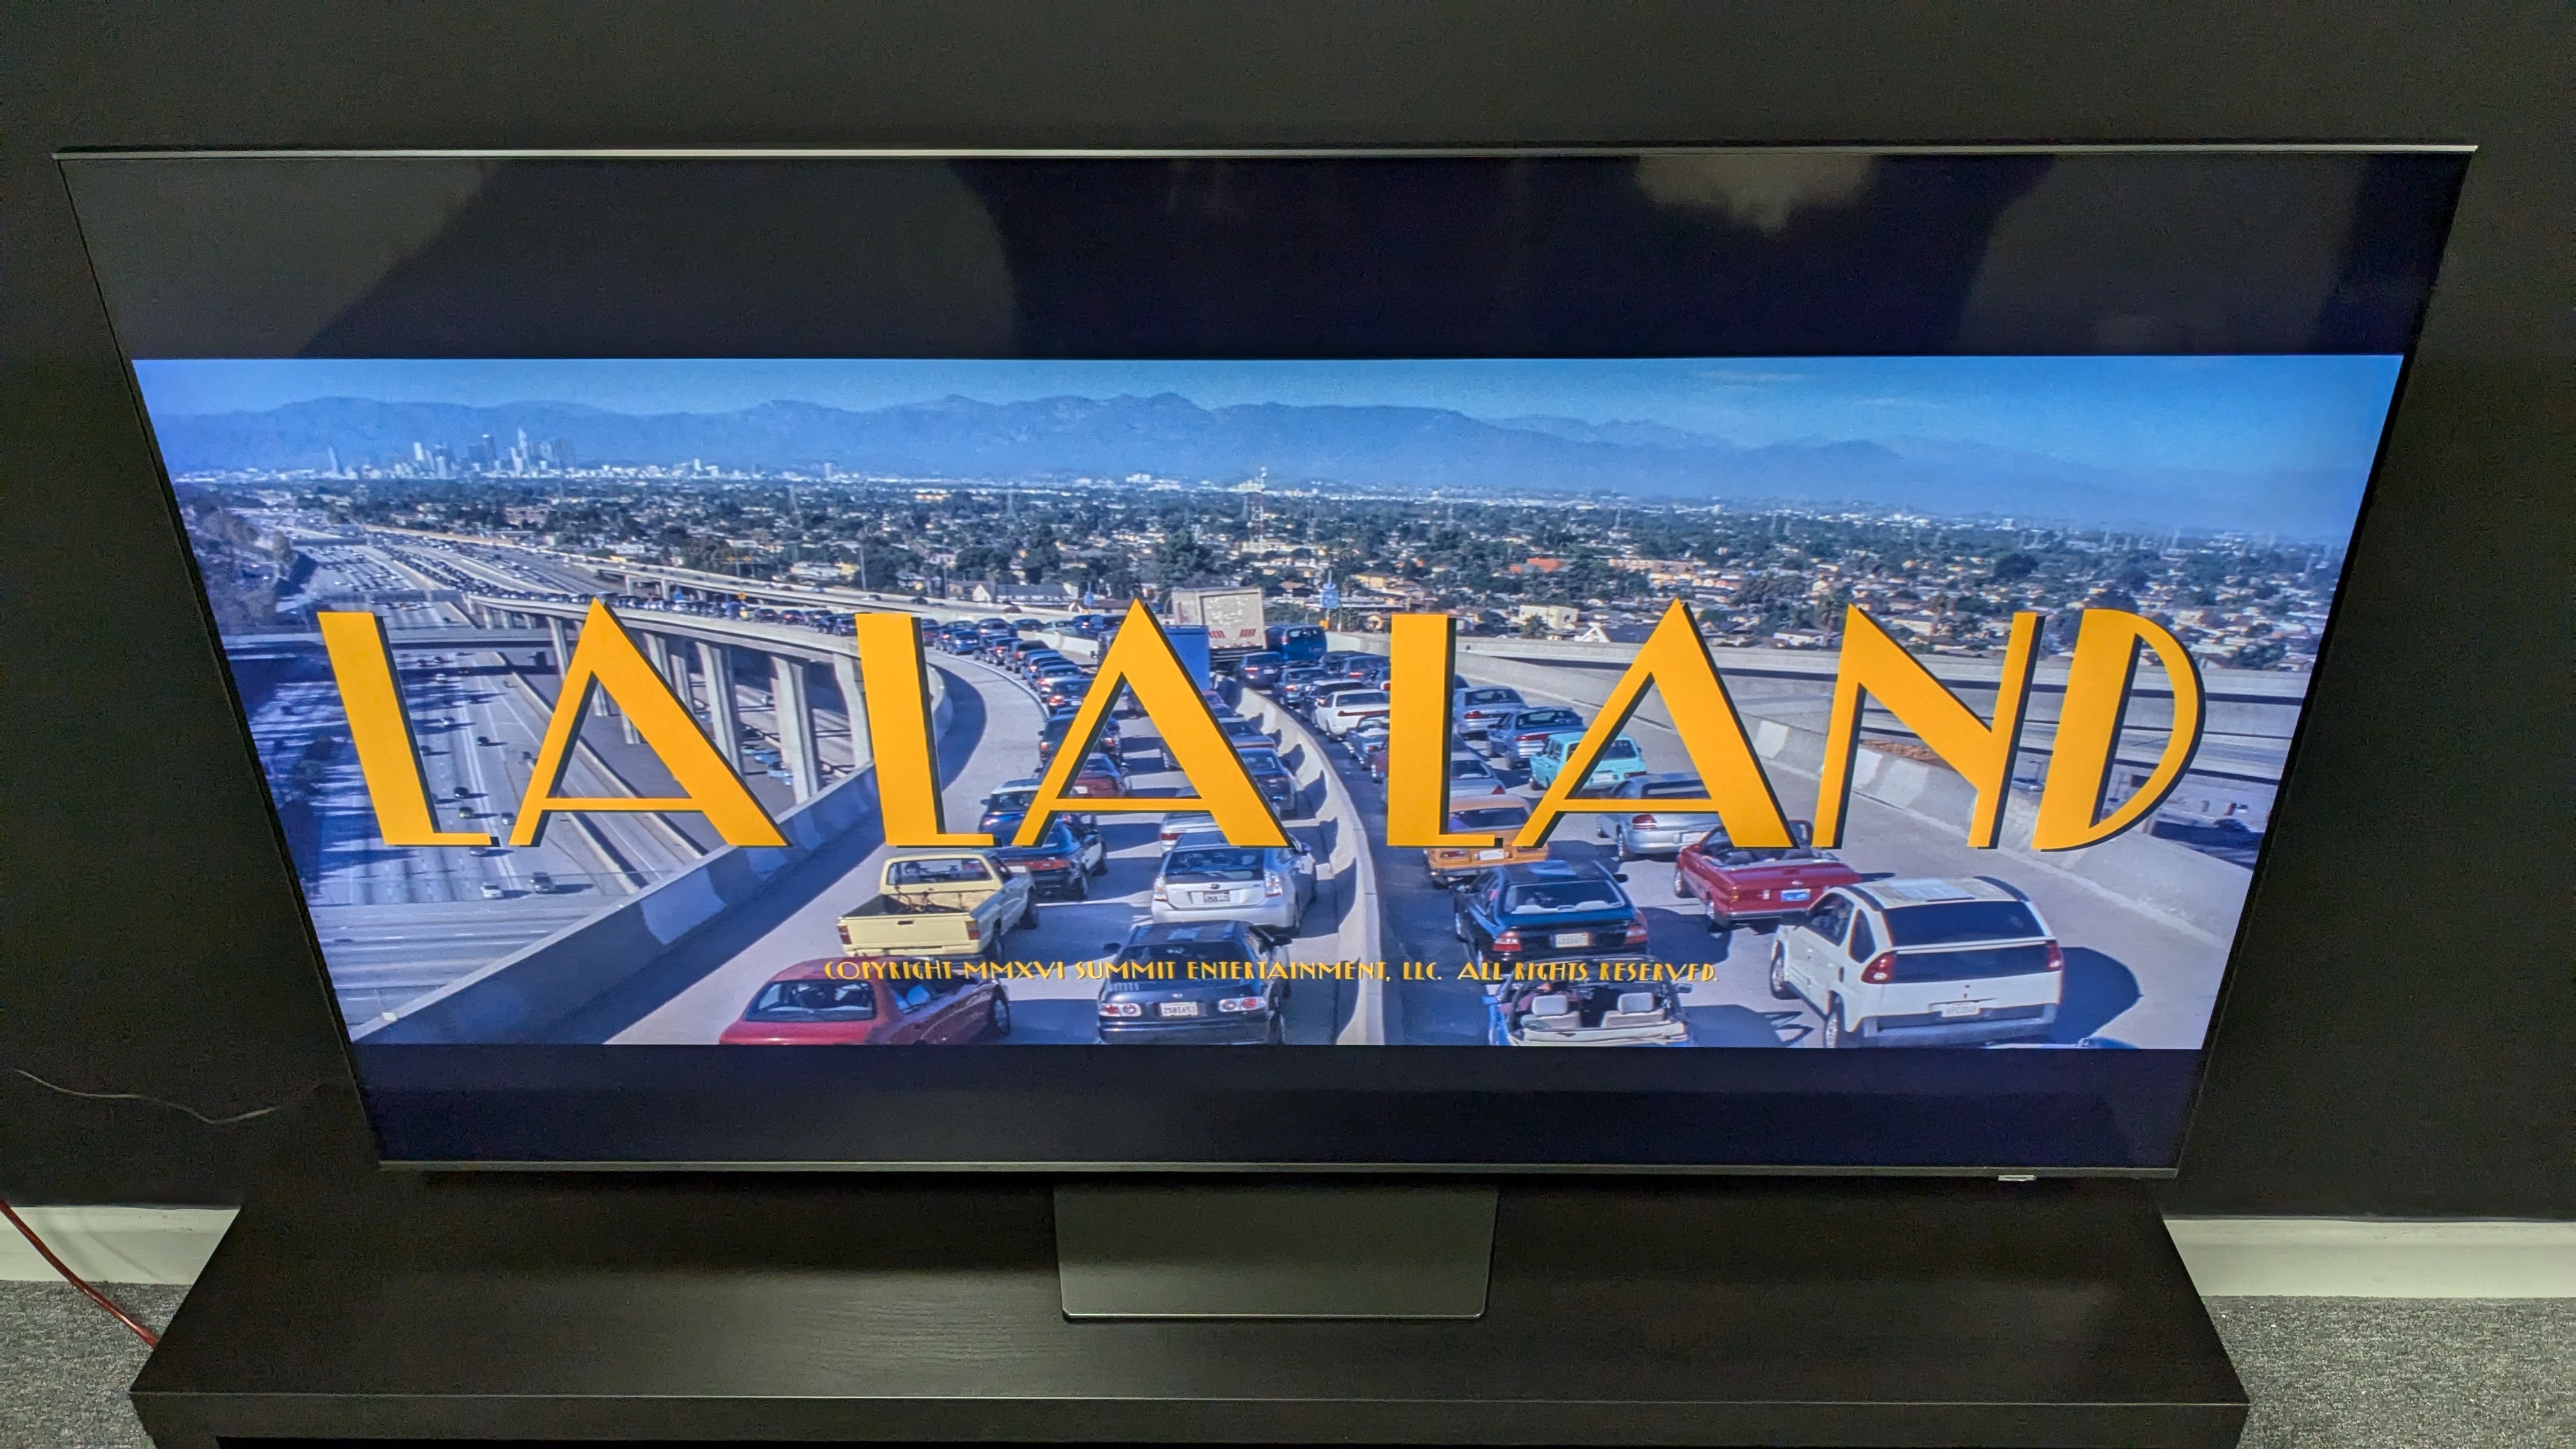 Samsung QN85D with La La Land title on screen